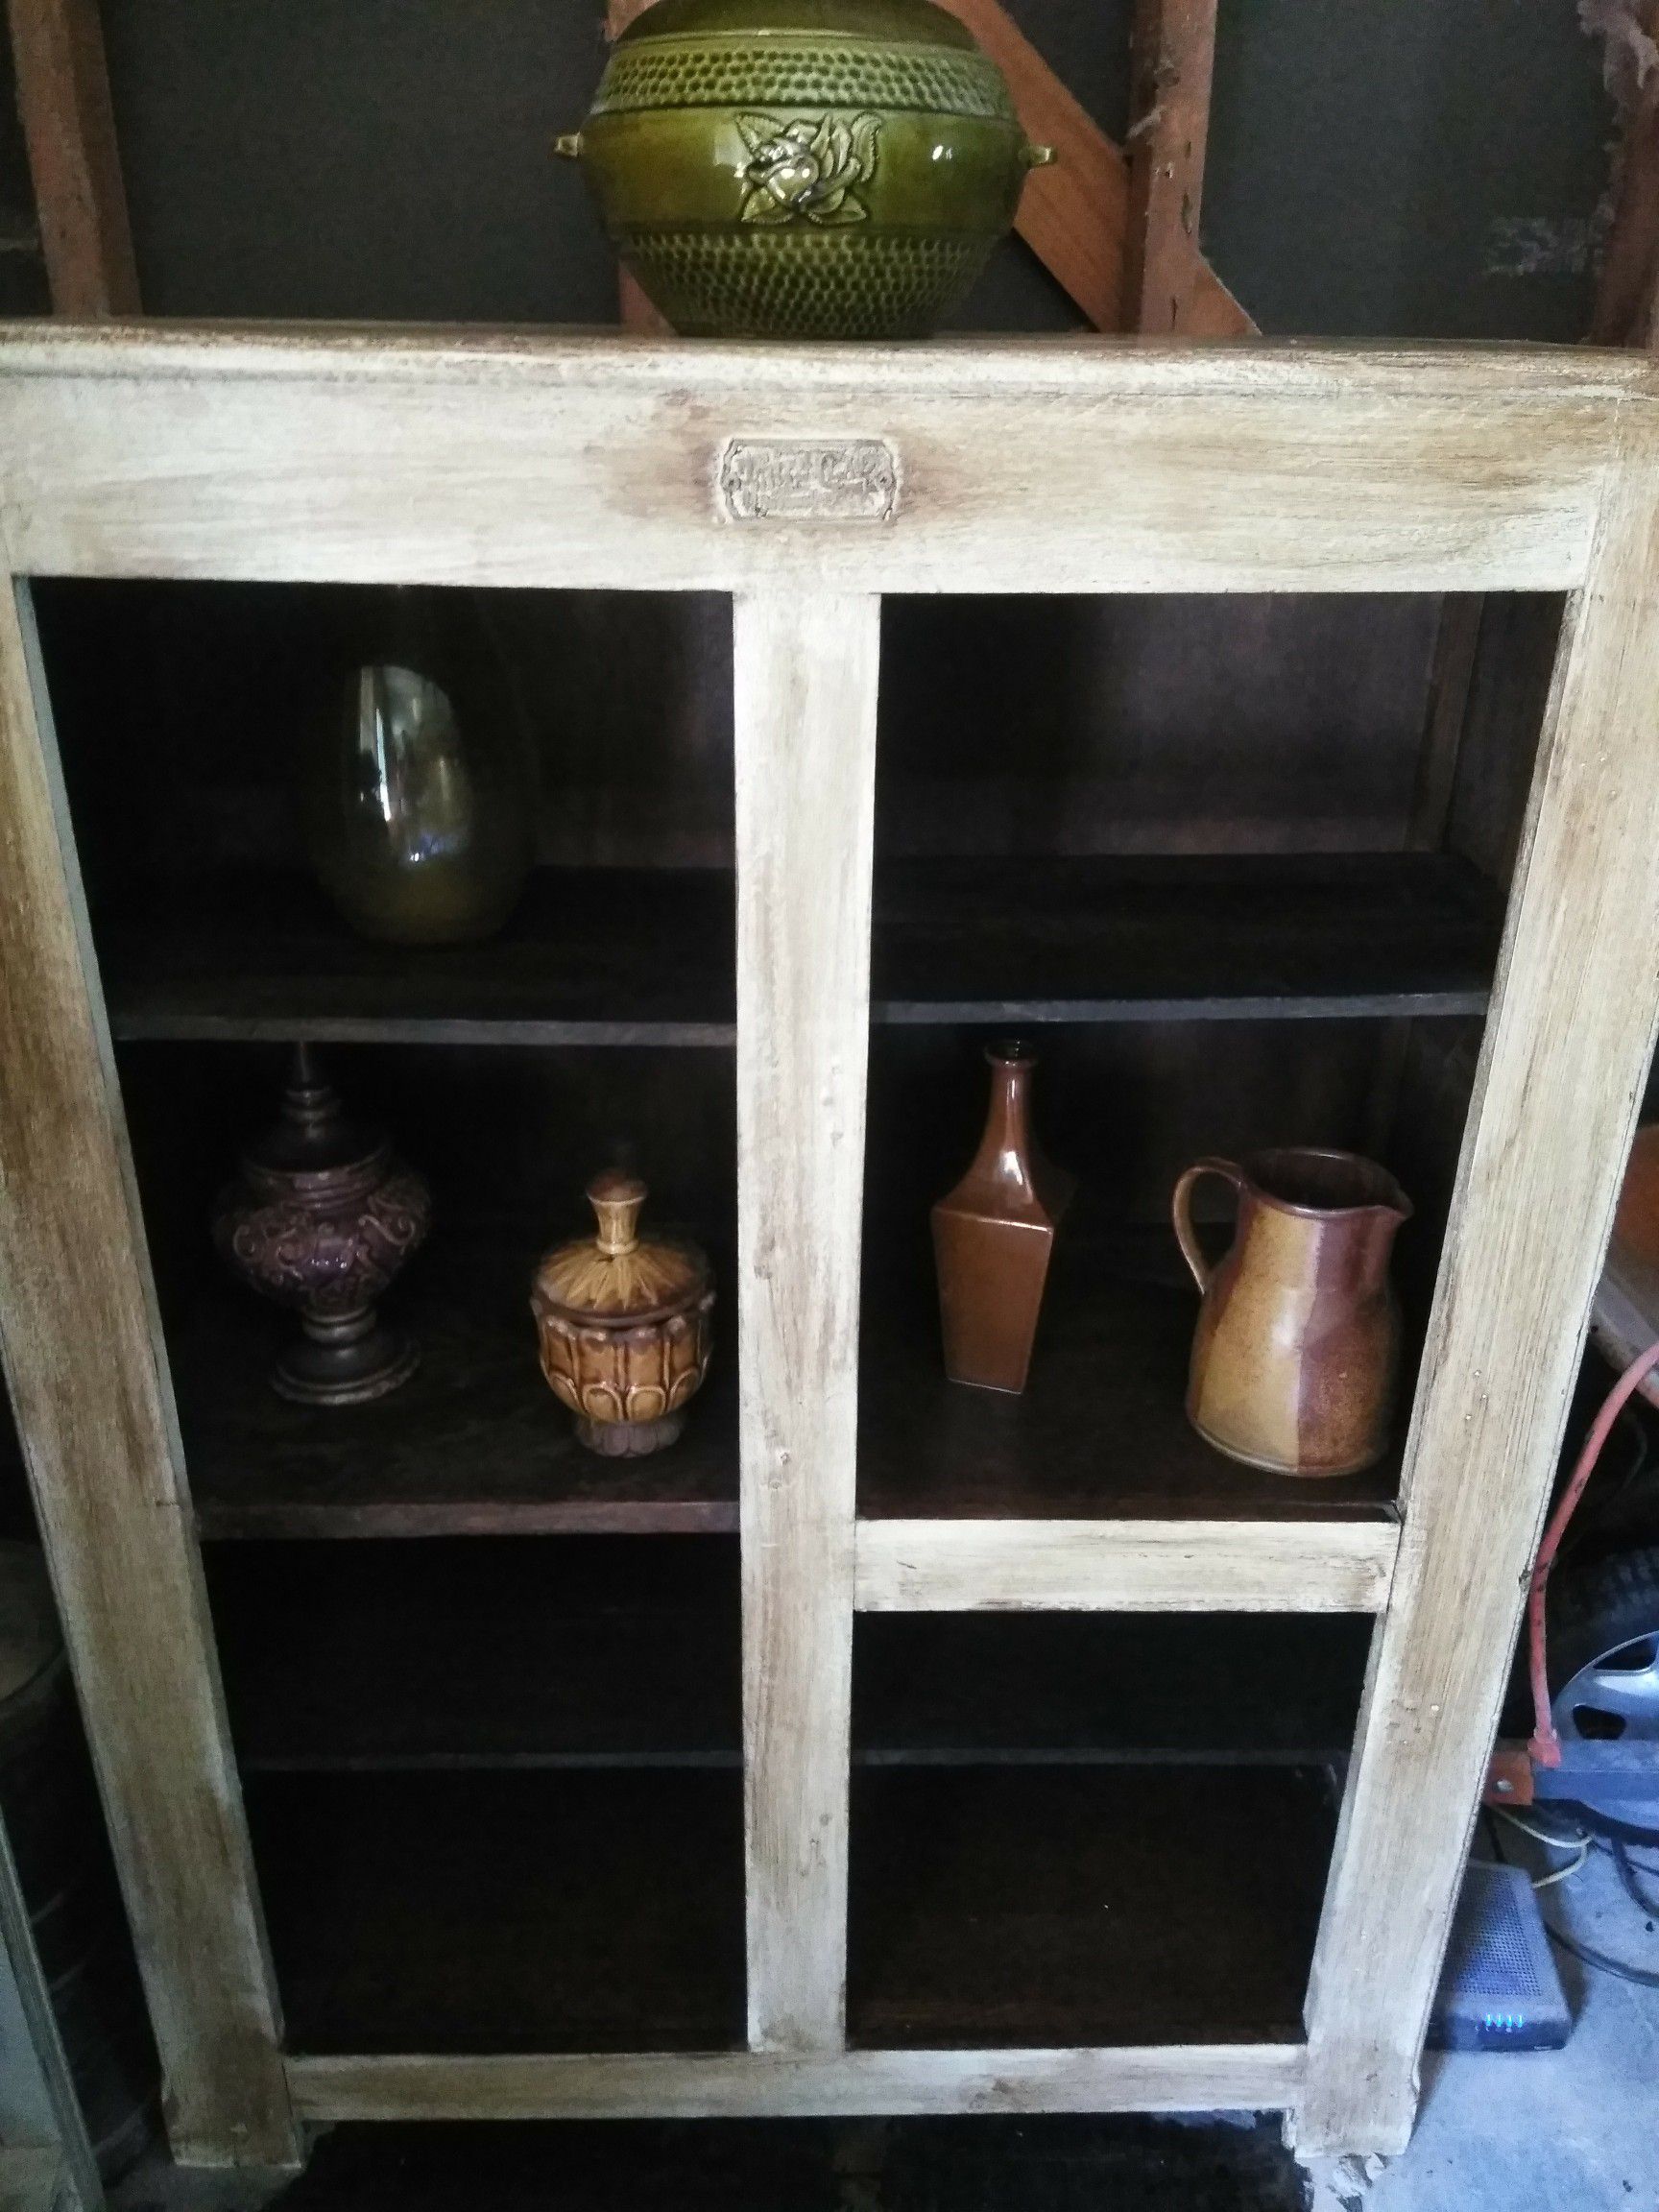 A cabinet shelf